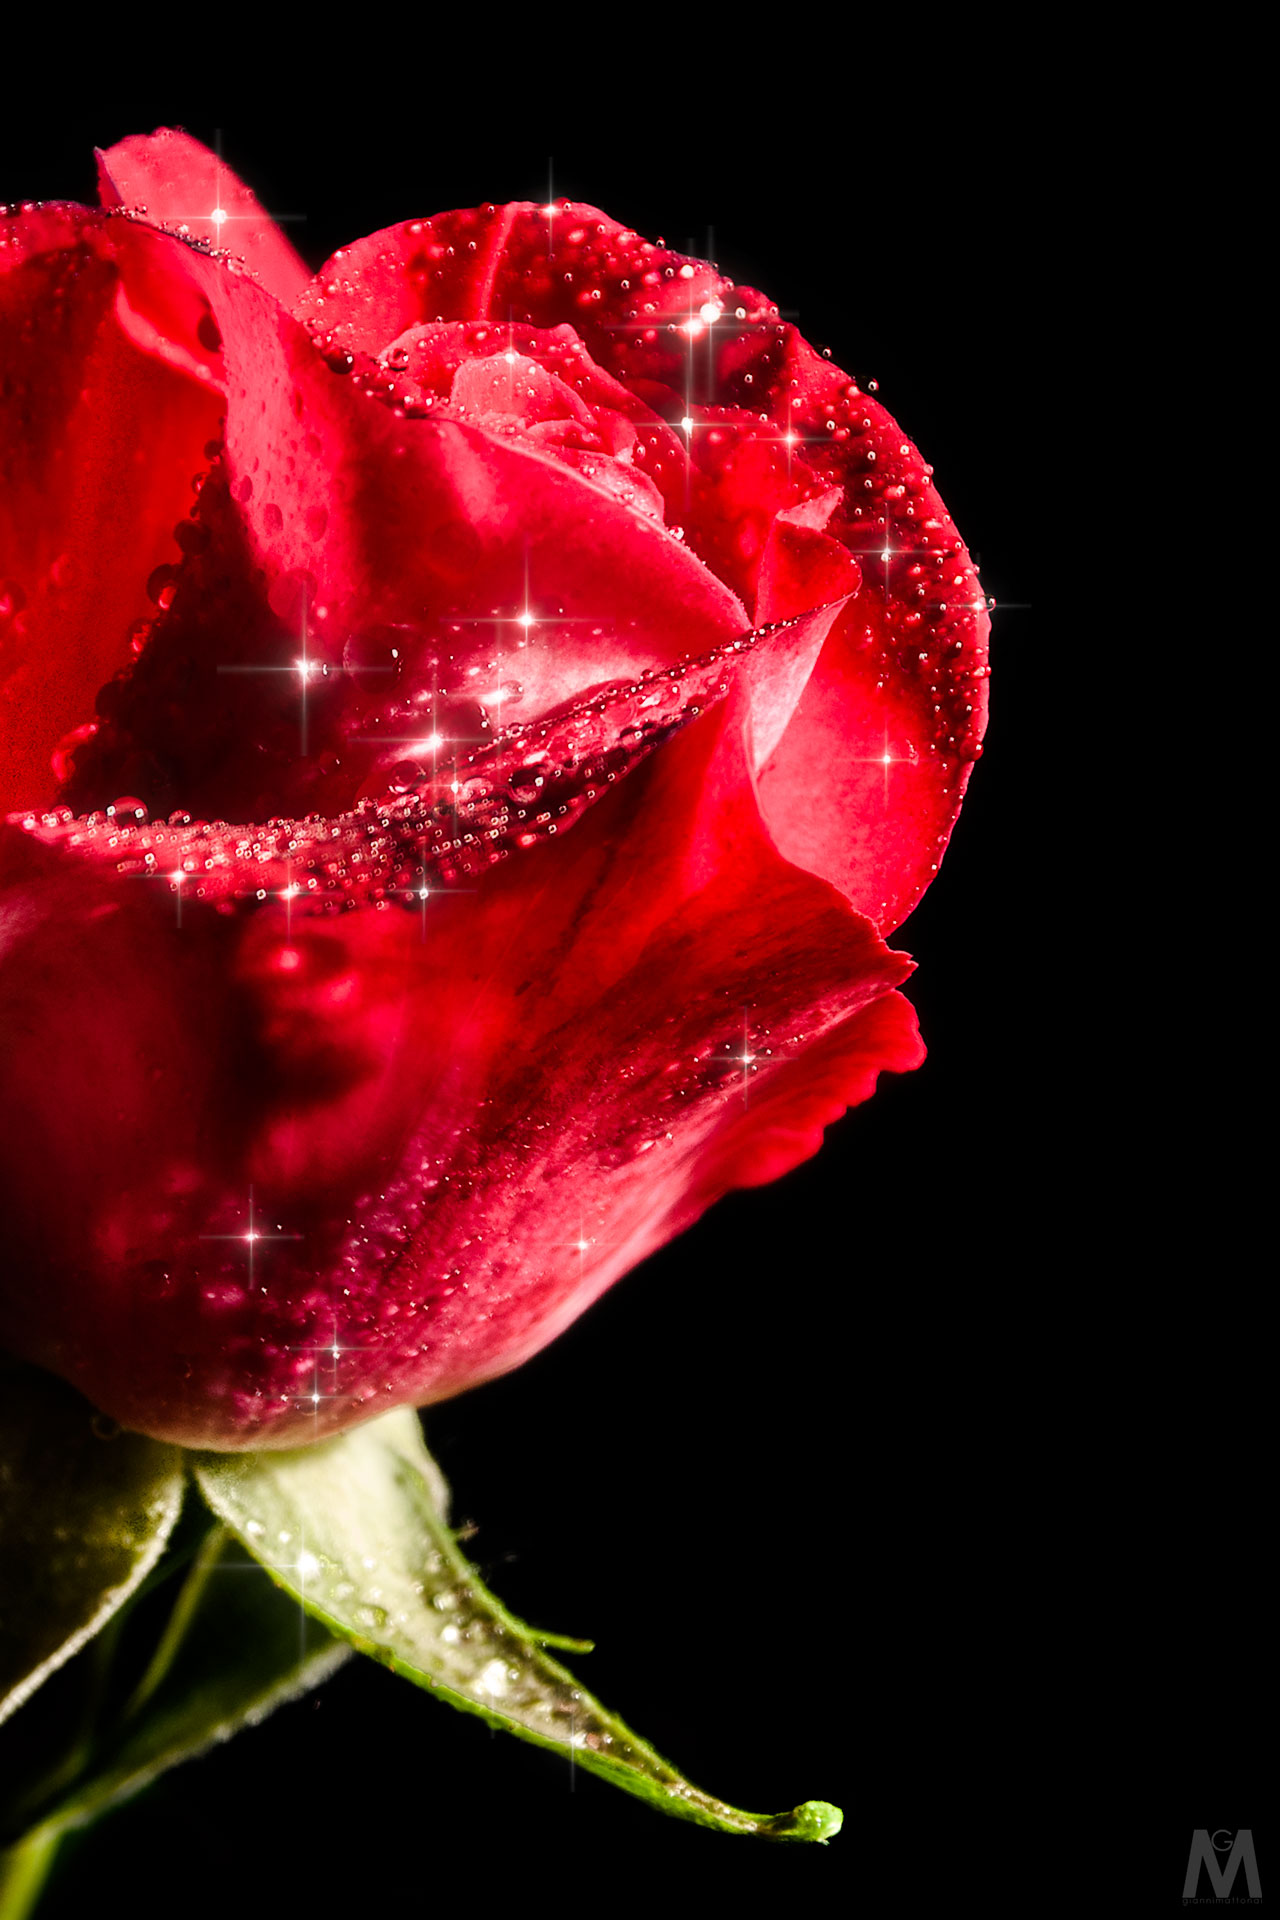 my sweet rose...